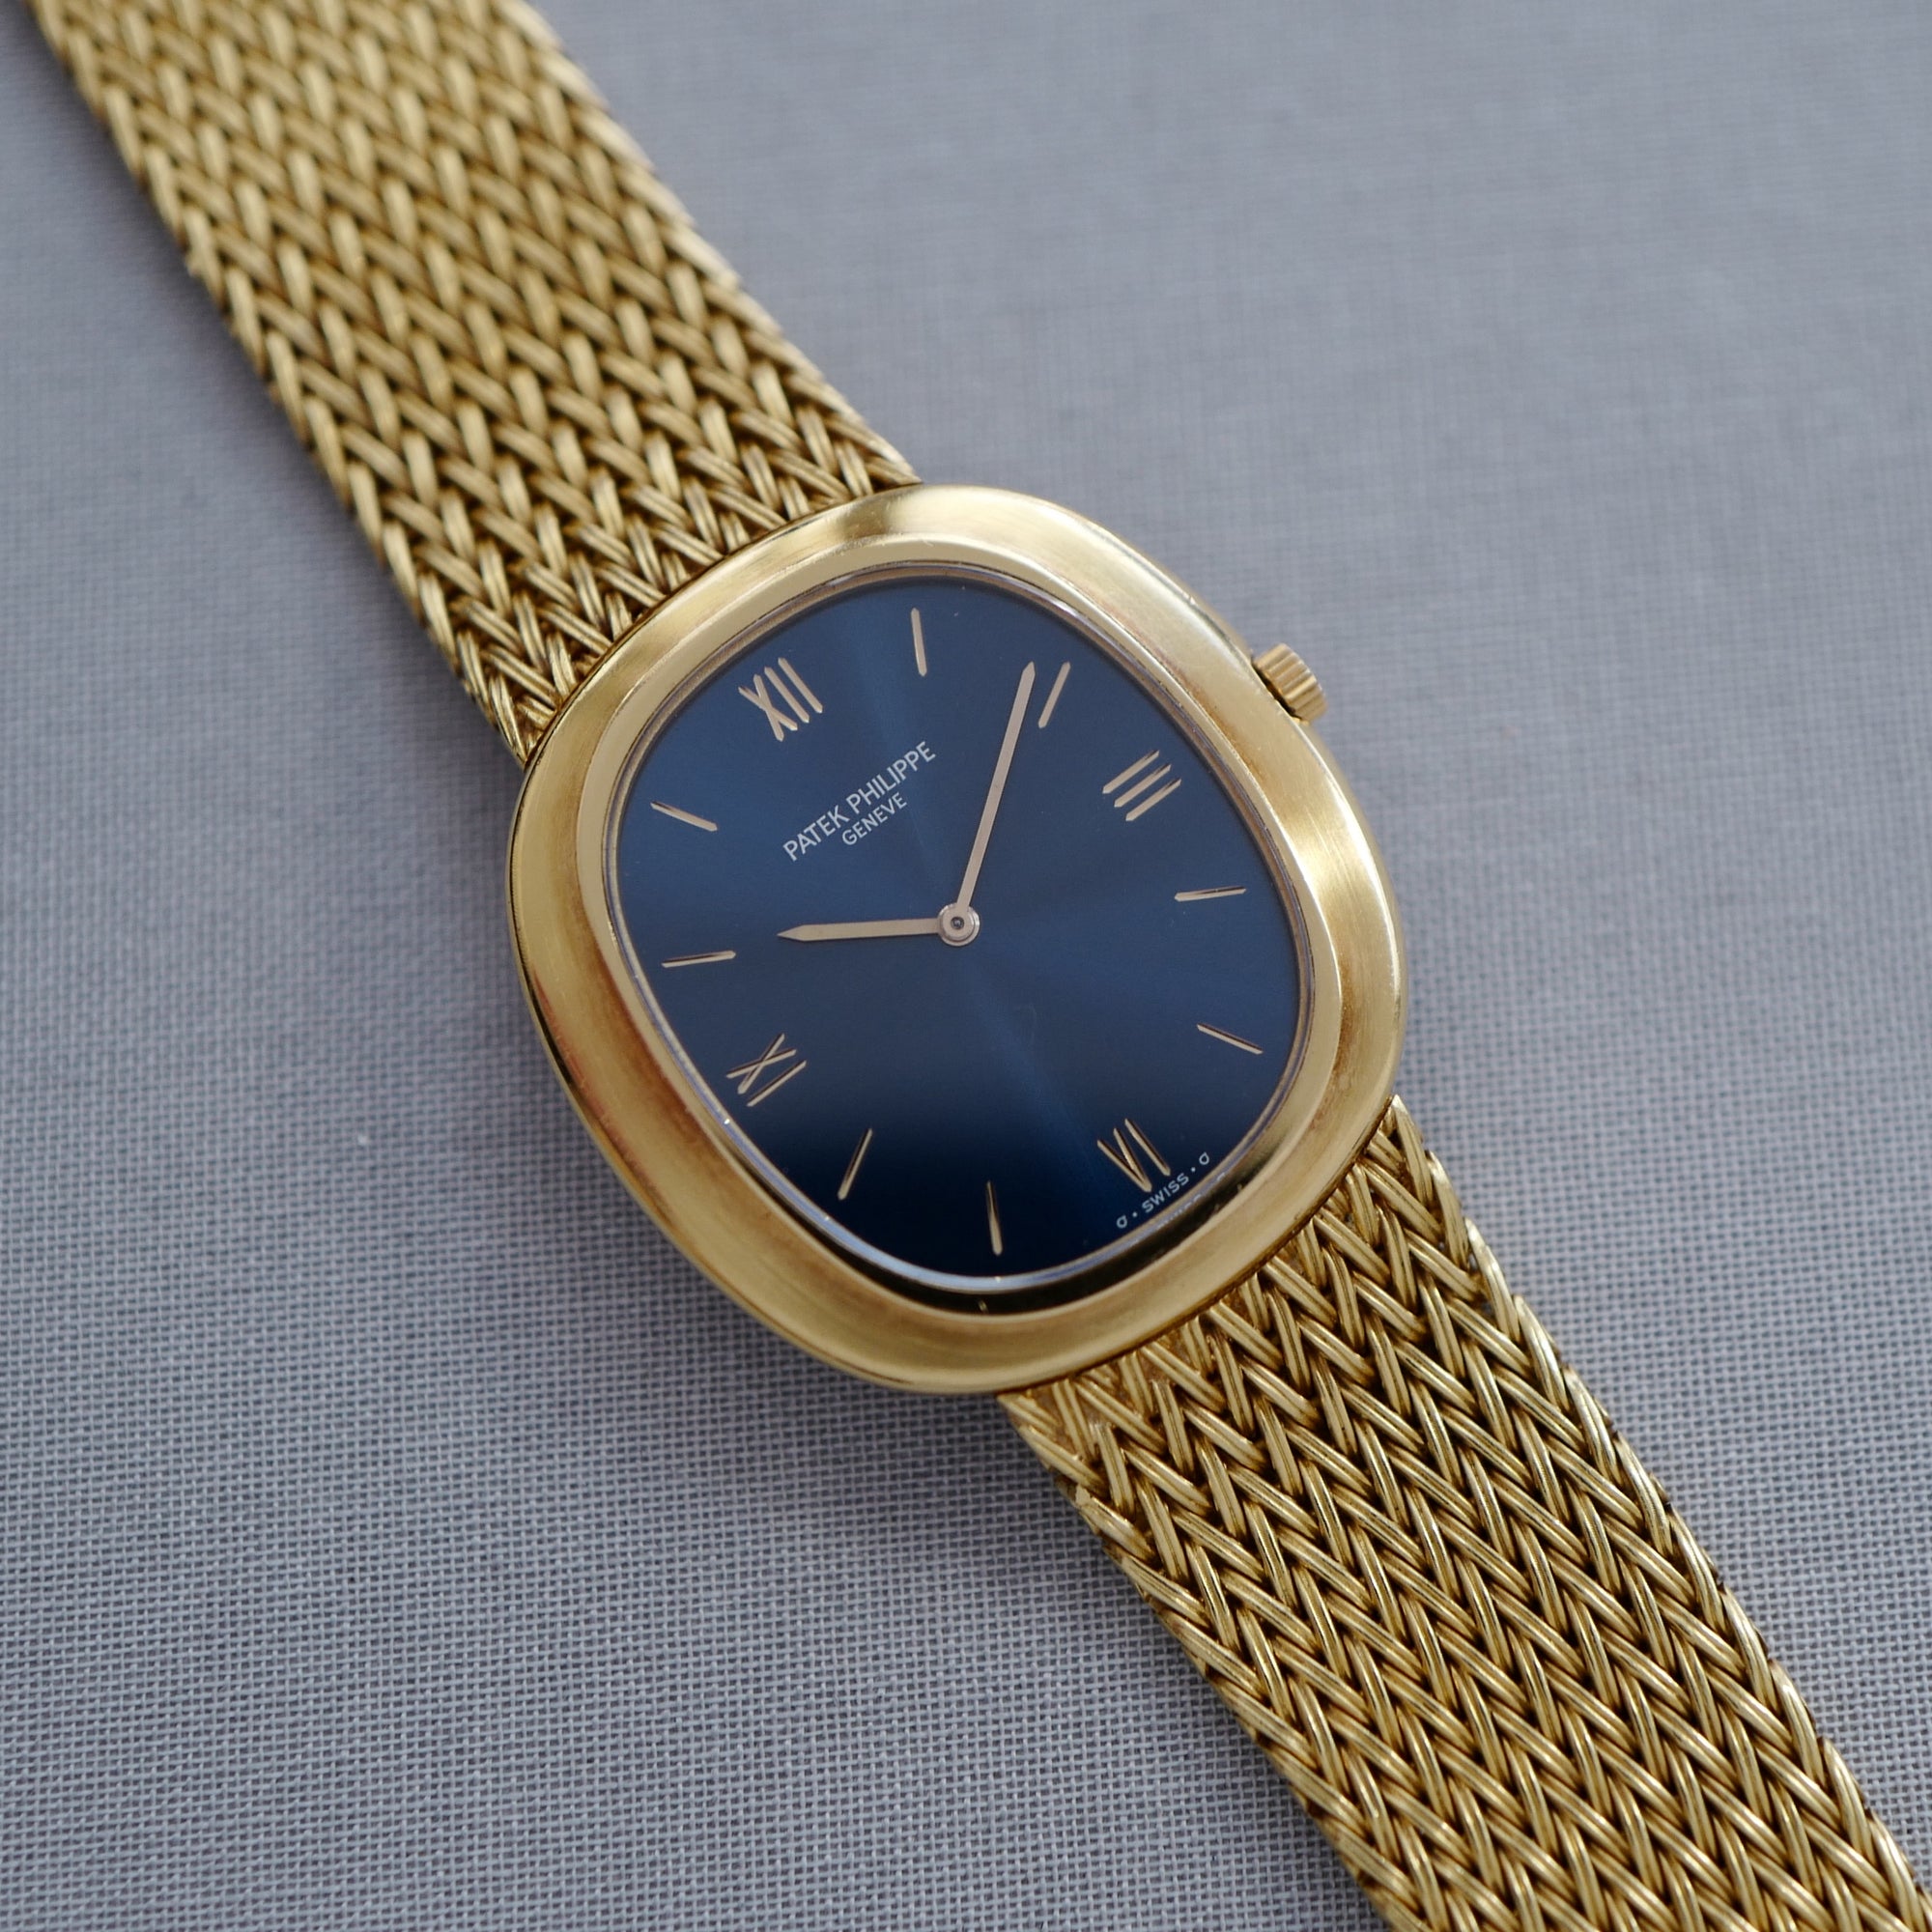 Patek Philippe - Patek Philippe Yellow Gold Ellipse Automatic Watch, Ref. 3589 - The Keystone Watches